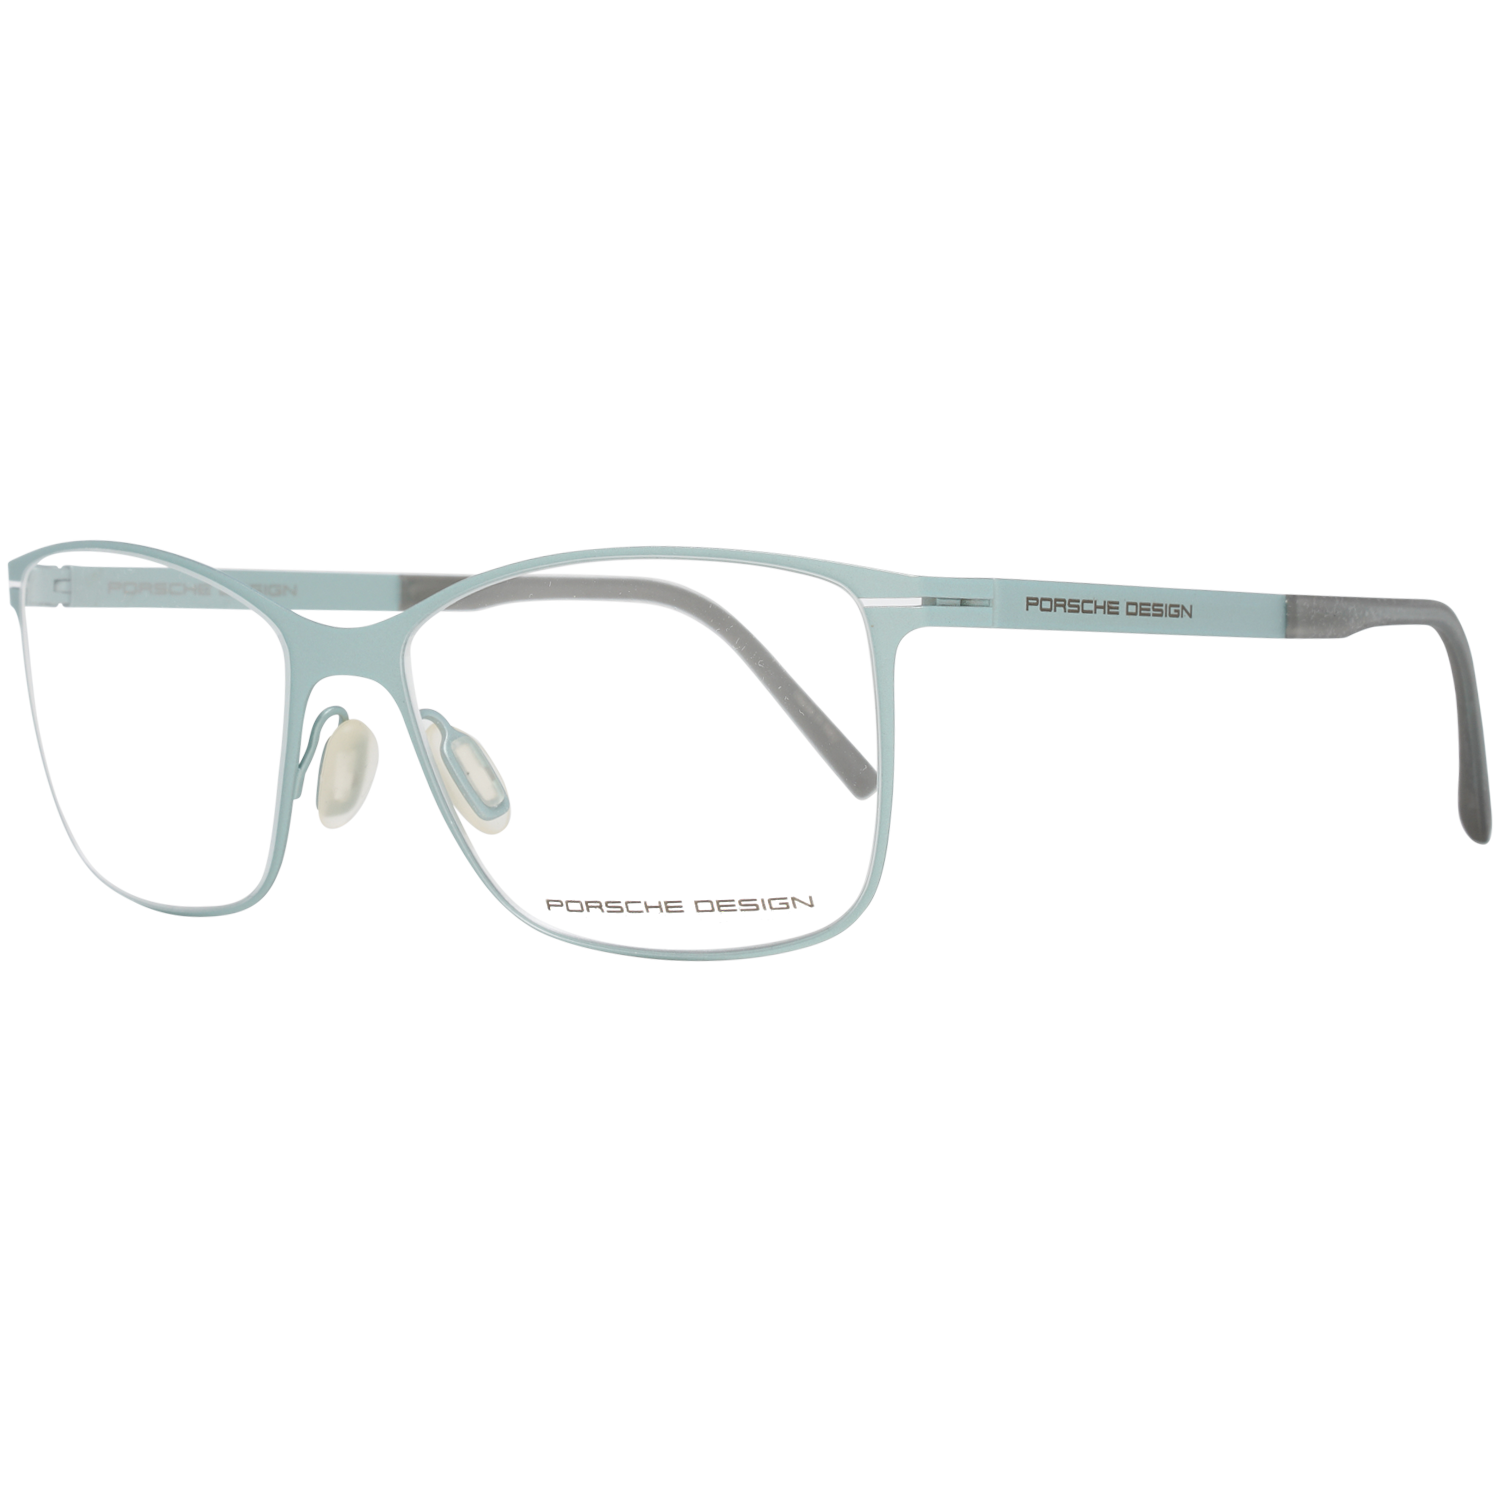 Porsche Design Eyeglasses Porsche Design Glasses Frames P8262 B 54 Eyeglasses Eyewear UK USA Australia 